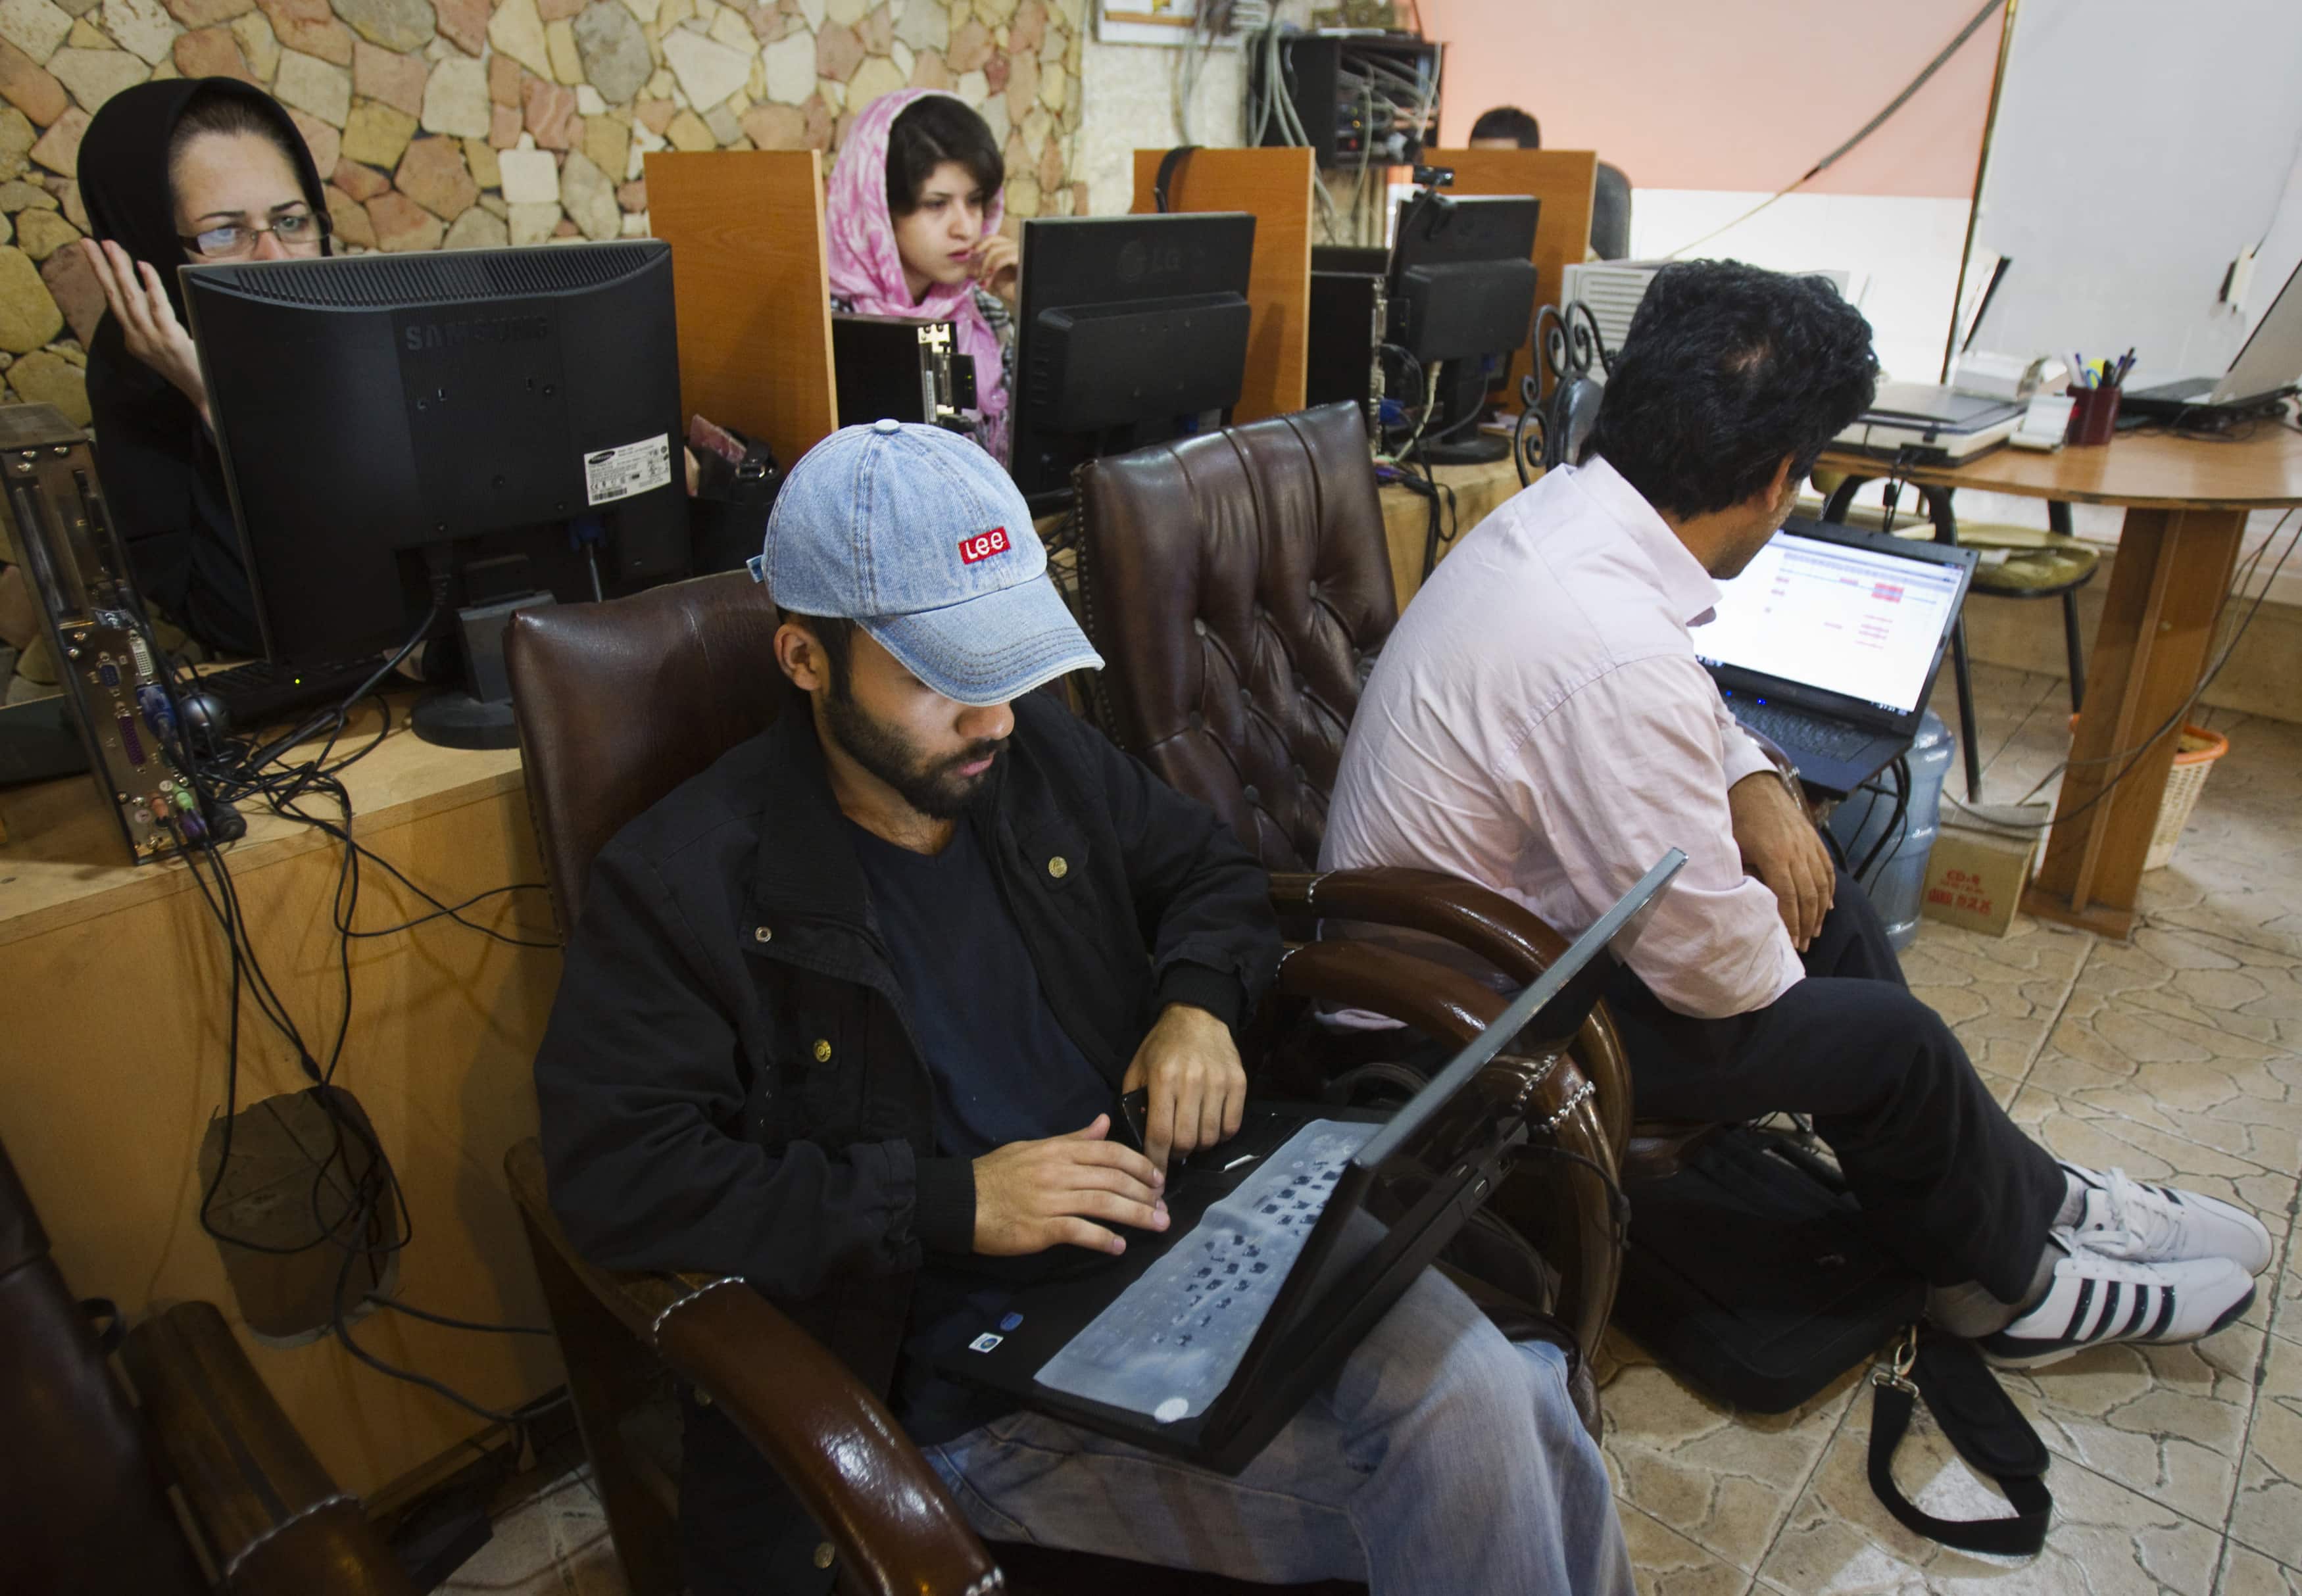 Customers use computers at an internet cafe in Tehran May 9, 2011, REUTERS/Raheb Homavandi